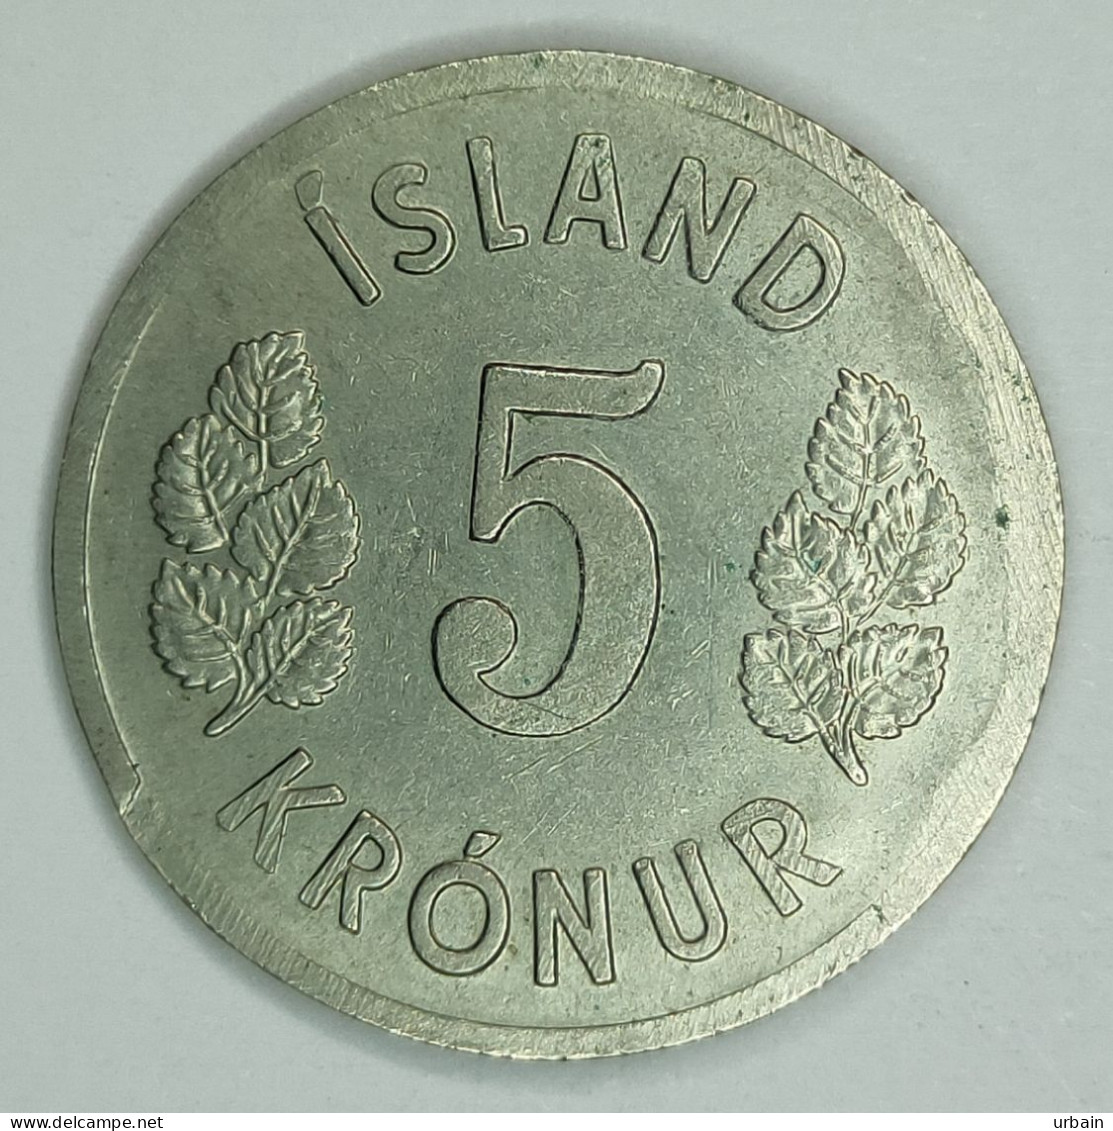 2x Coins - ICELAND - Republic Of Iceland (1944 - 1980) - Island